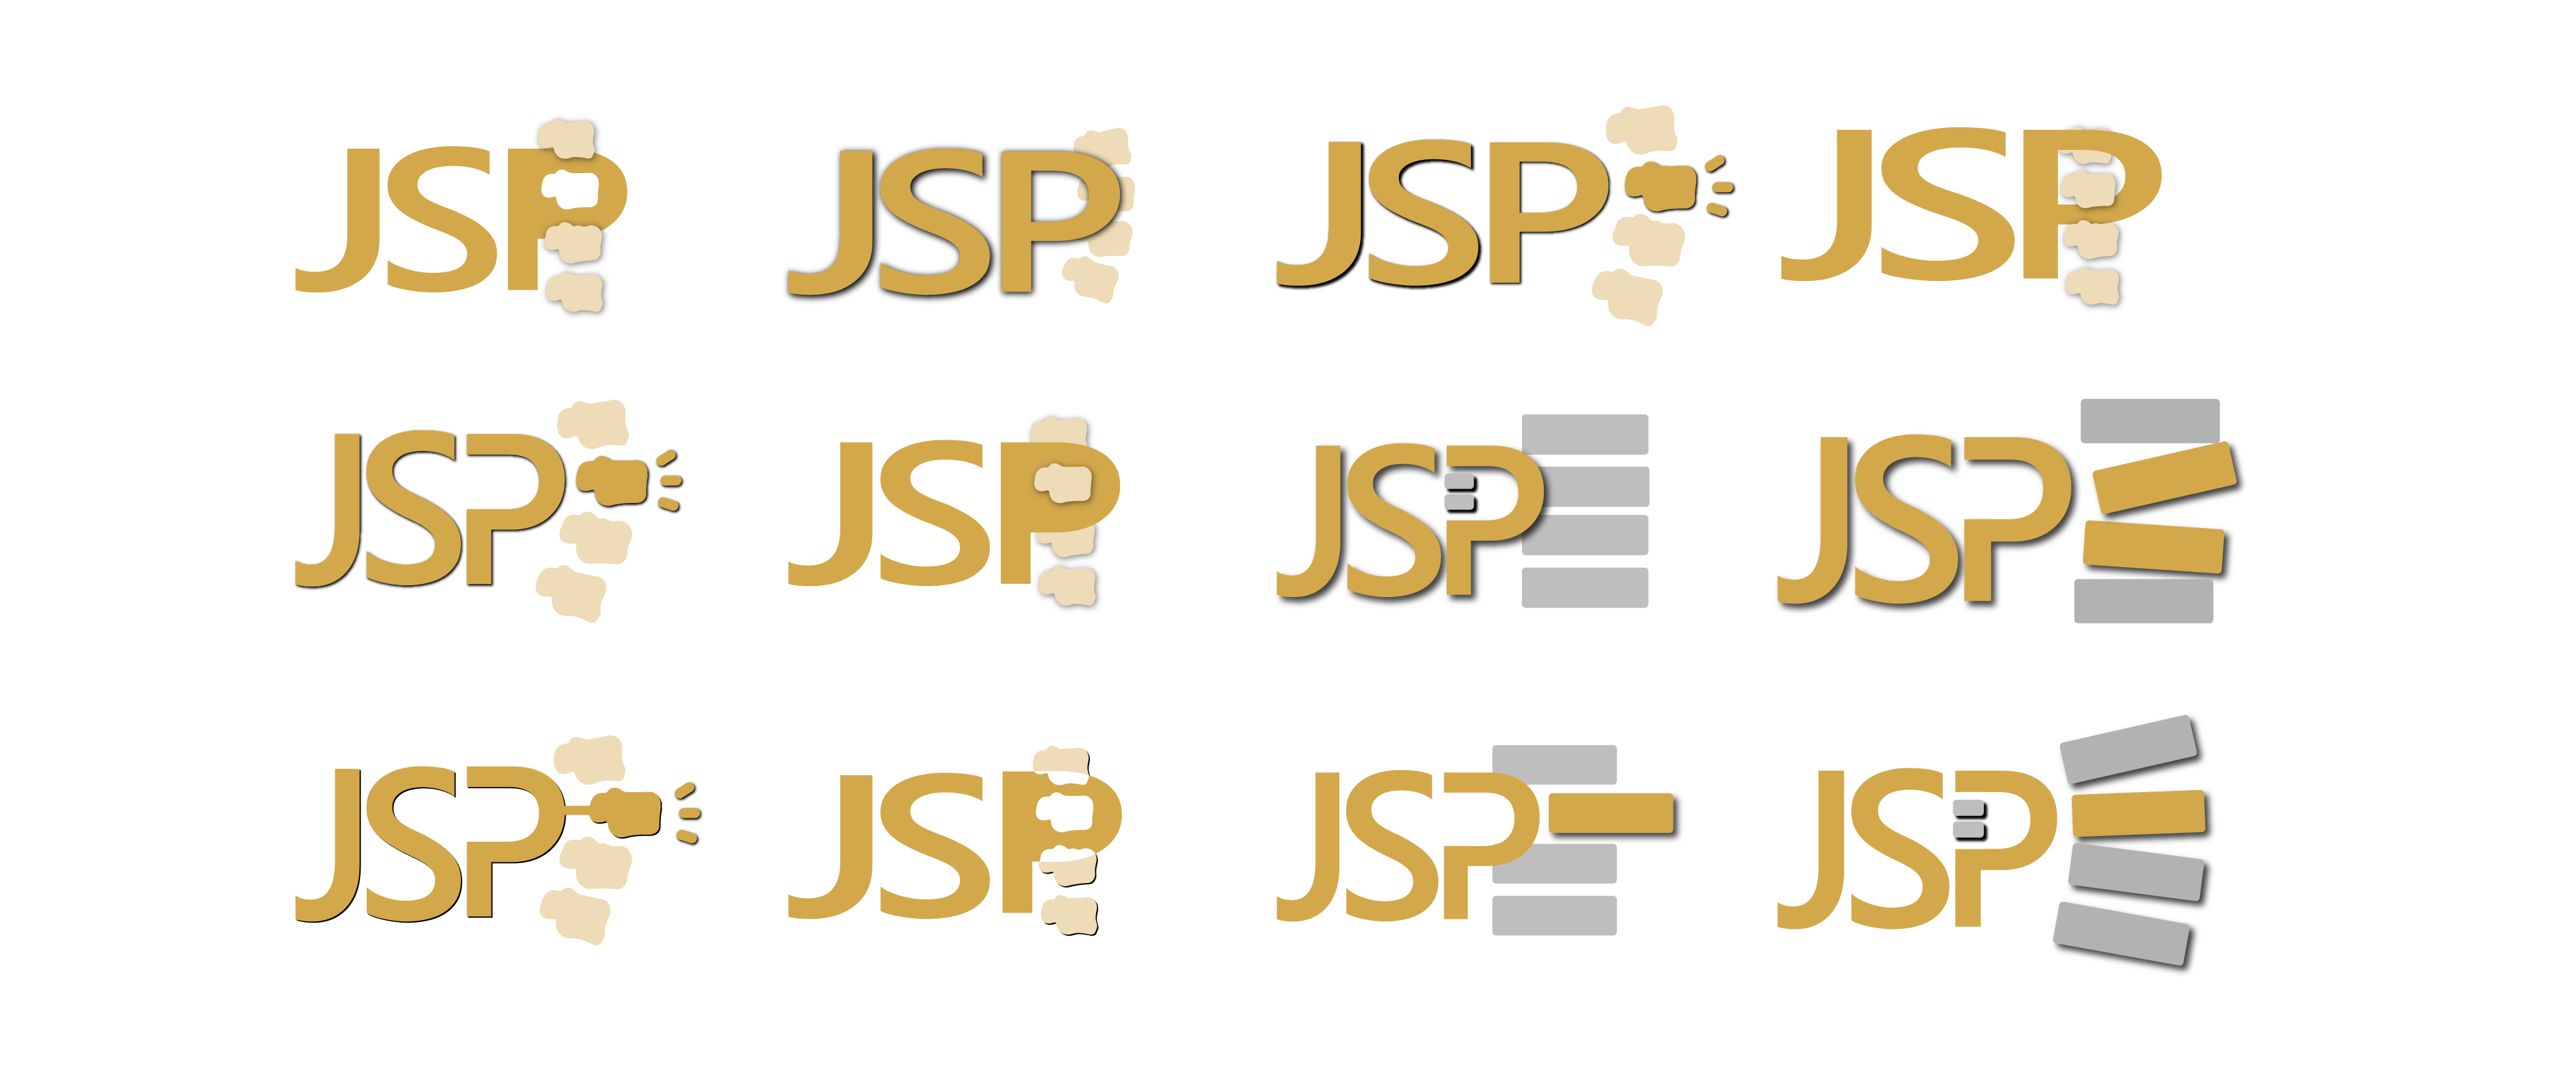 JSP | Logo Express - Corporate PPE Branding